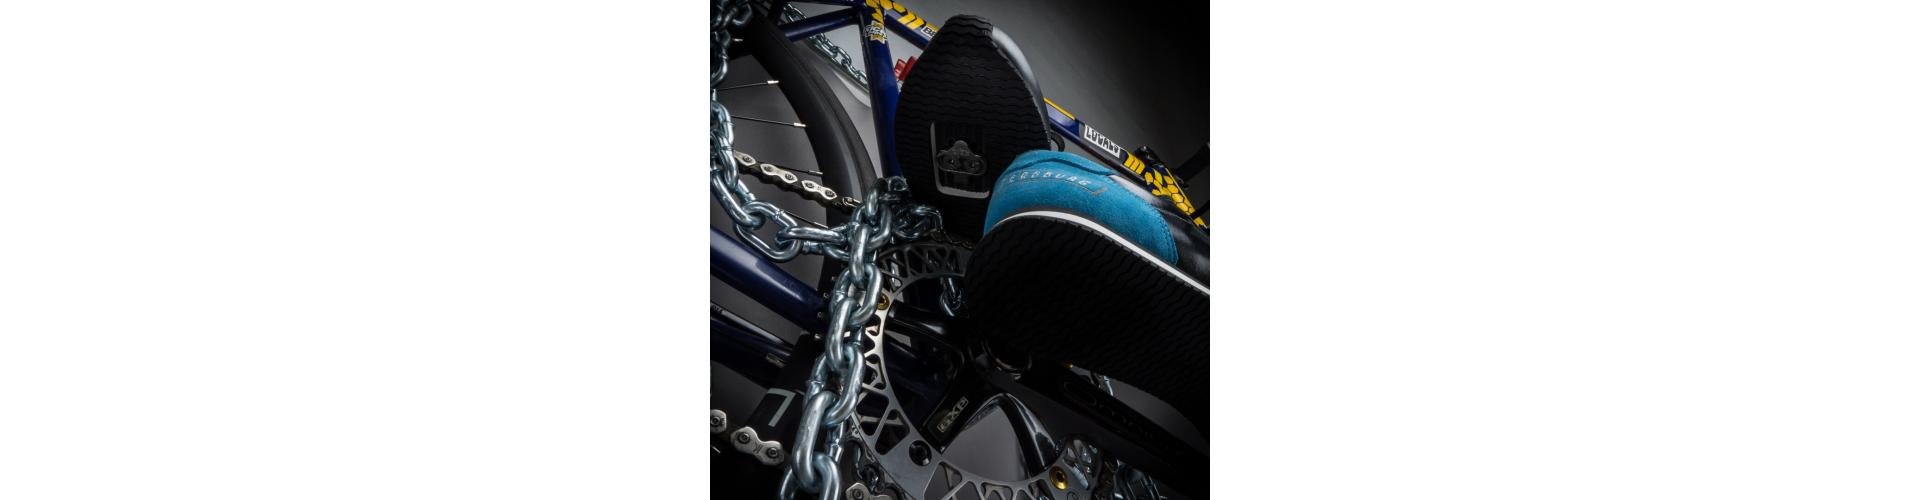 Вело кроссовки в коллаборации AFOUR x Chain Gang SPB Brewdog